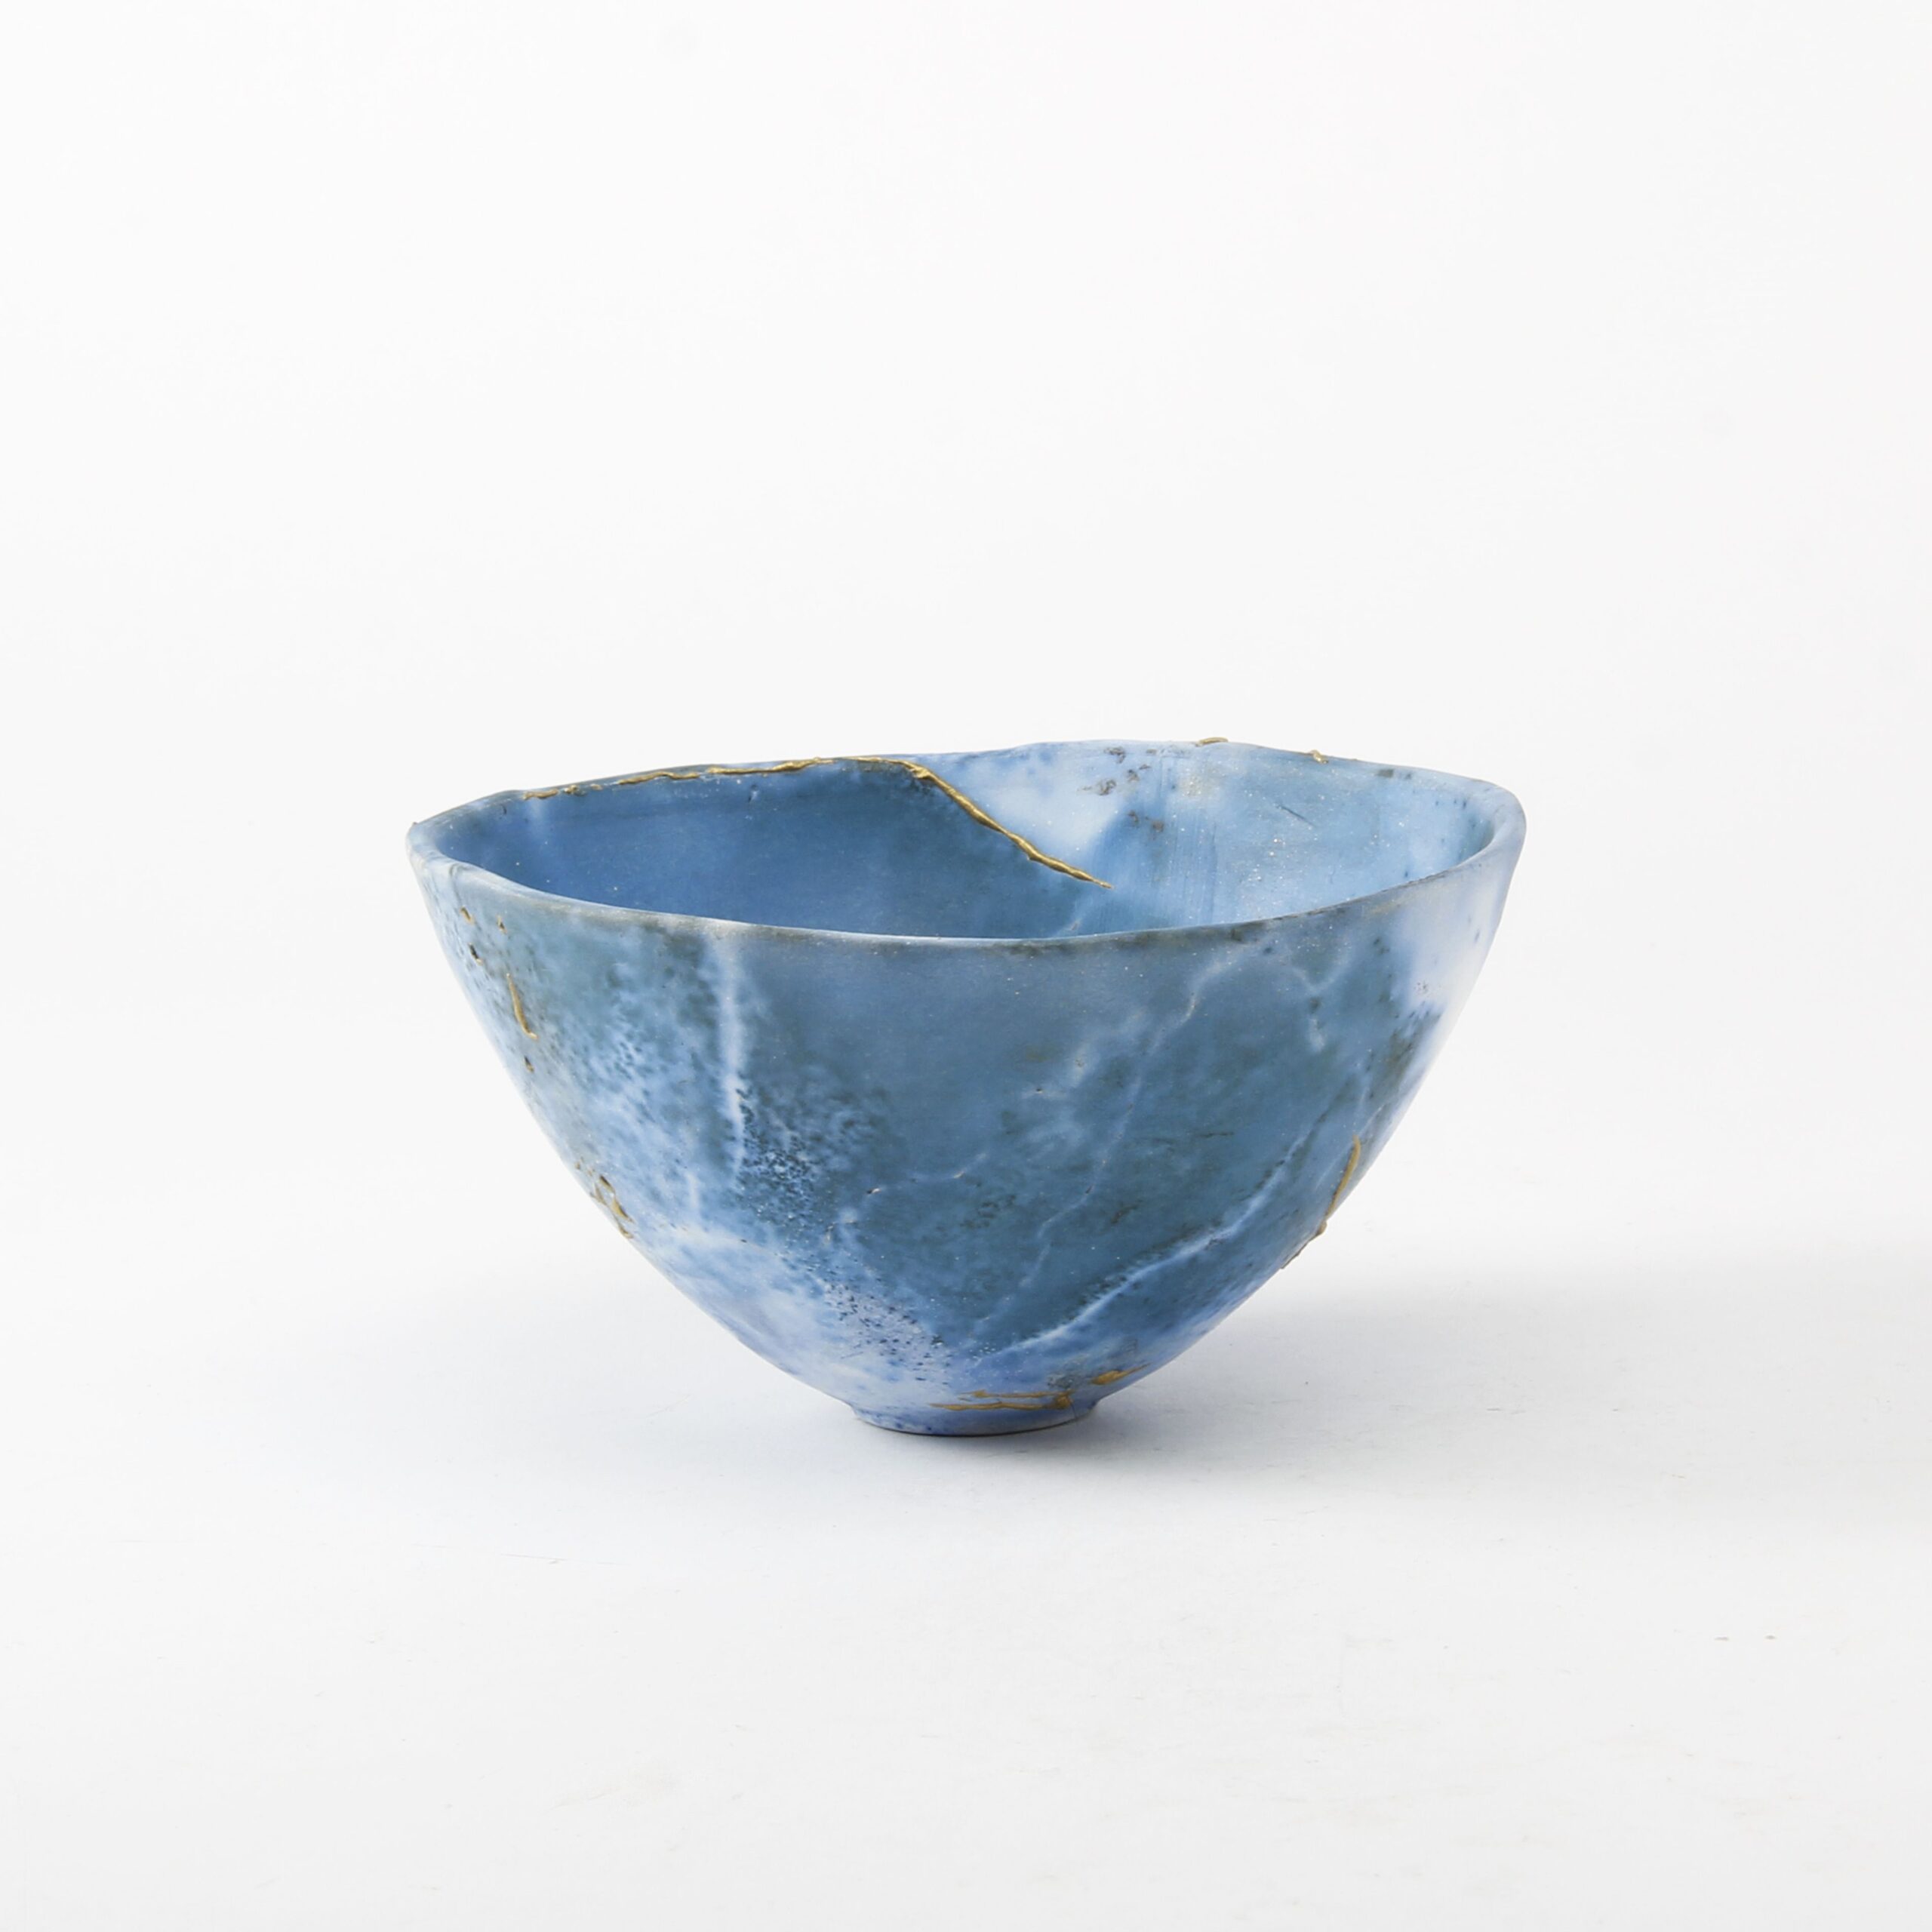 Alison Brannen: Medium Bowl Product Image 4 of 6